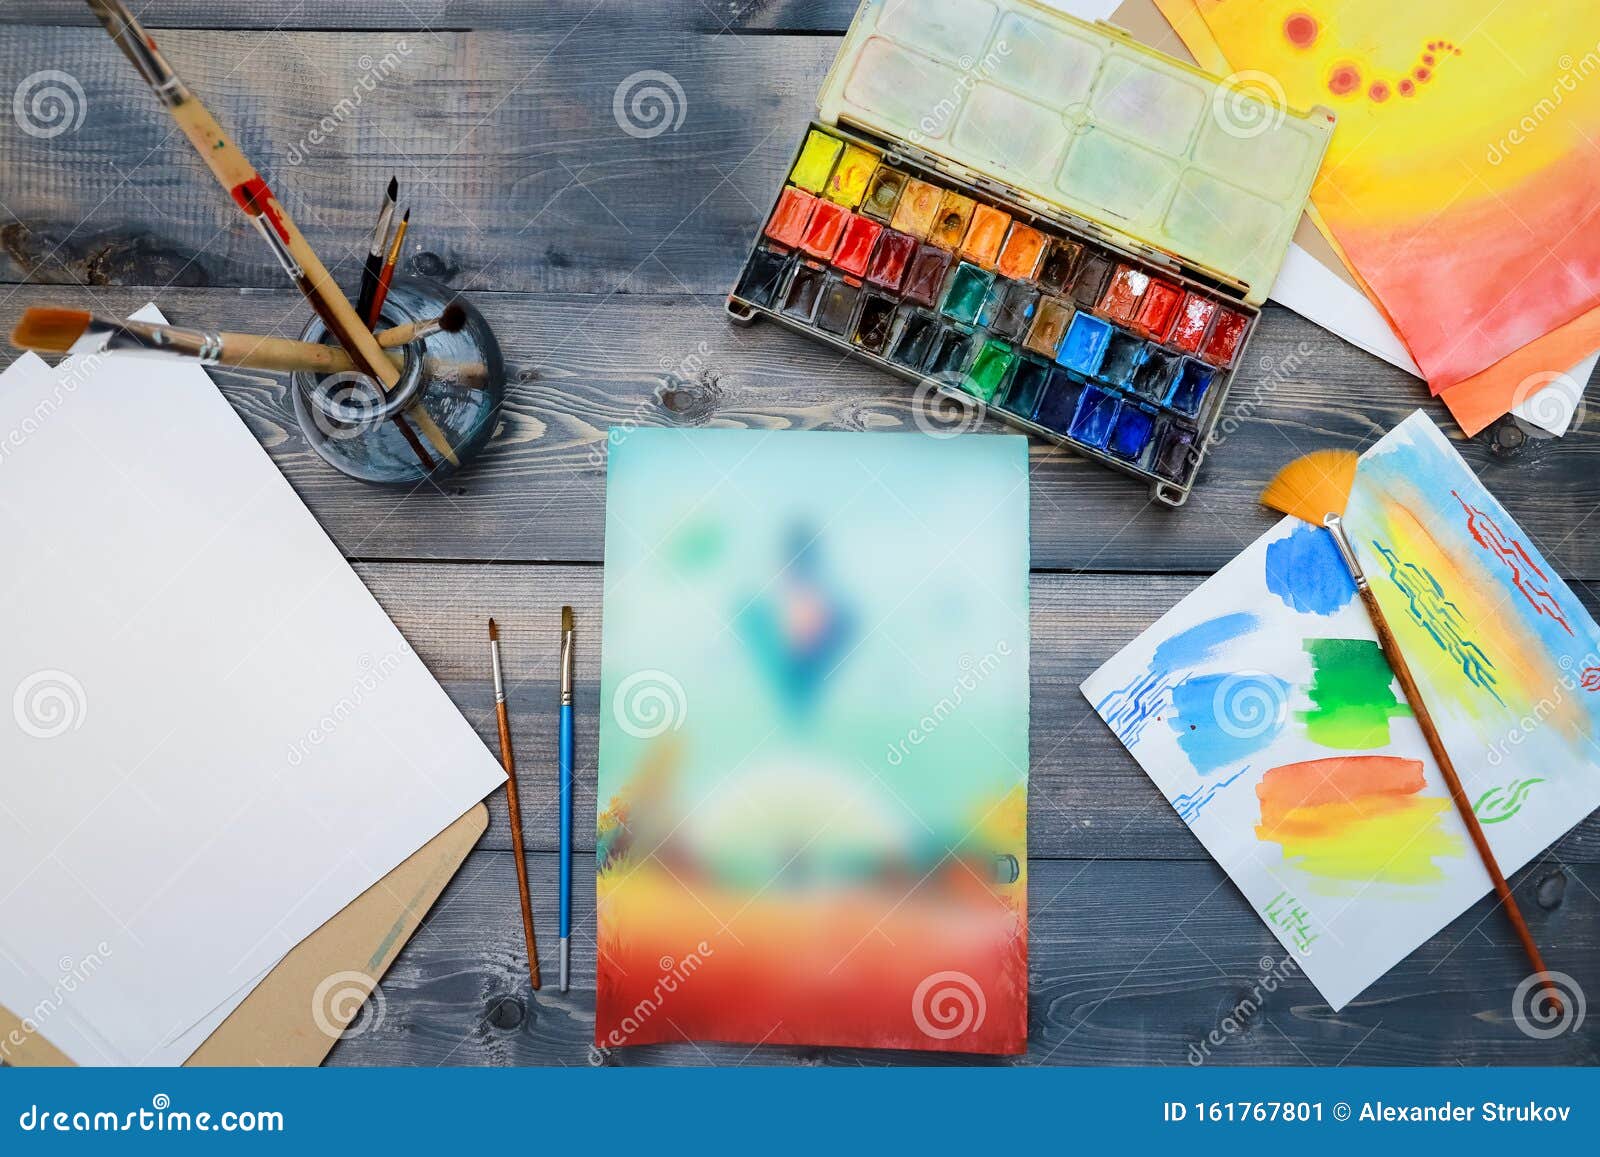 the artistÃ¢â¬â¢s supplies and his hand-made watercolor are laid out on a gray wooden table. on the table are open watercolor paints